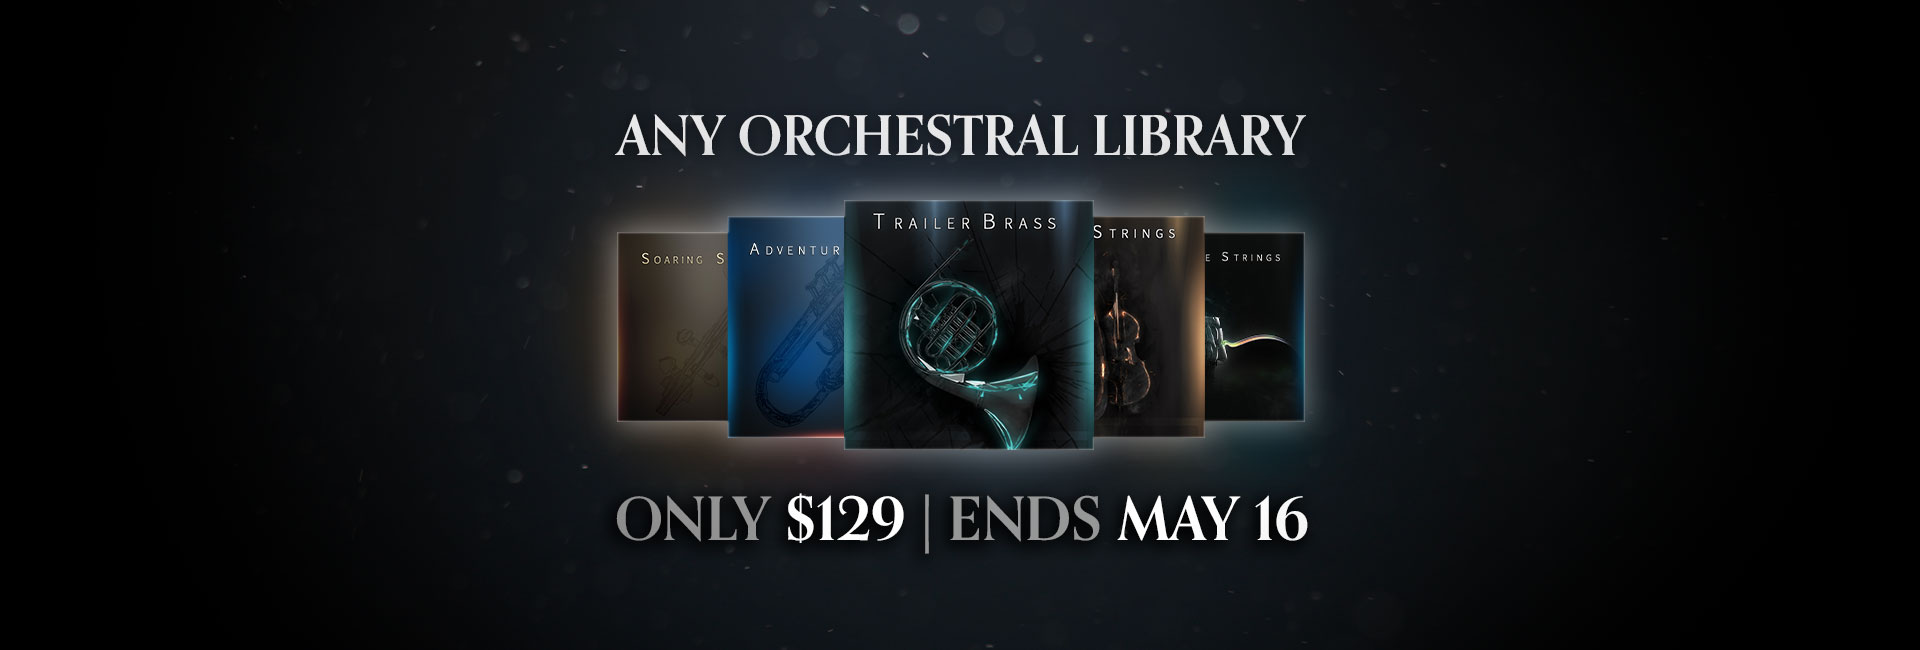 Orchestral-Sale-Homepage.jpg